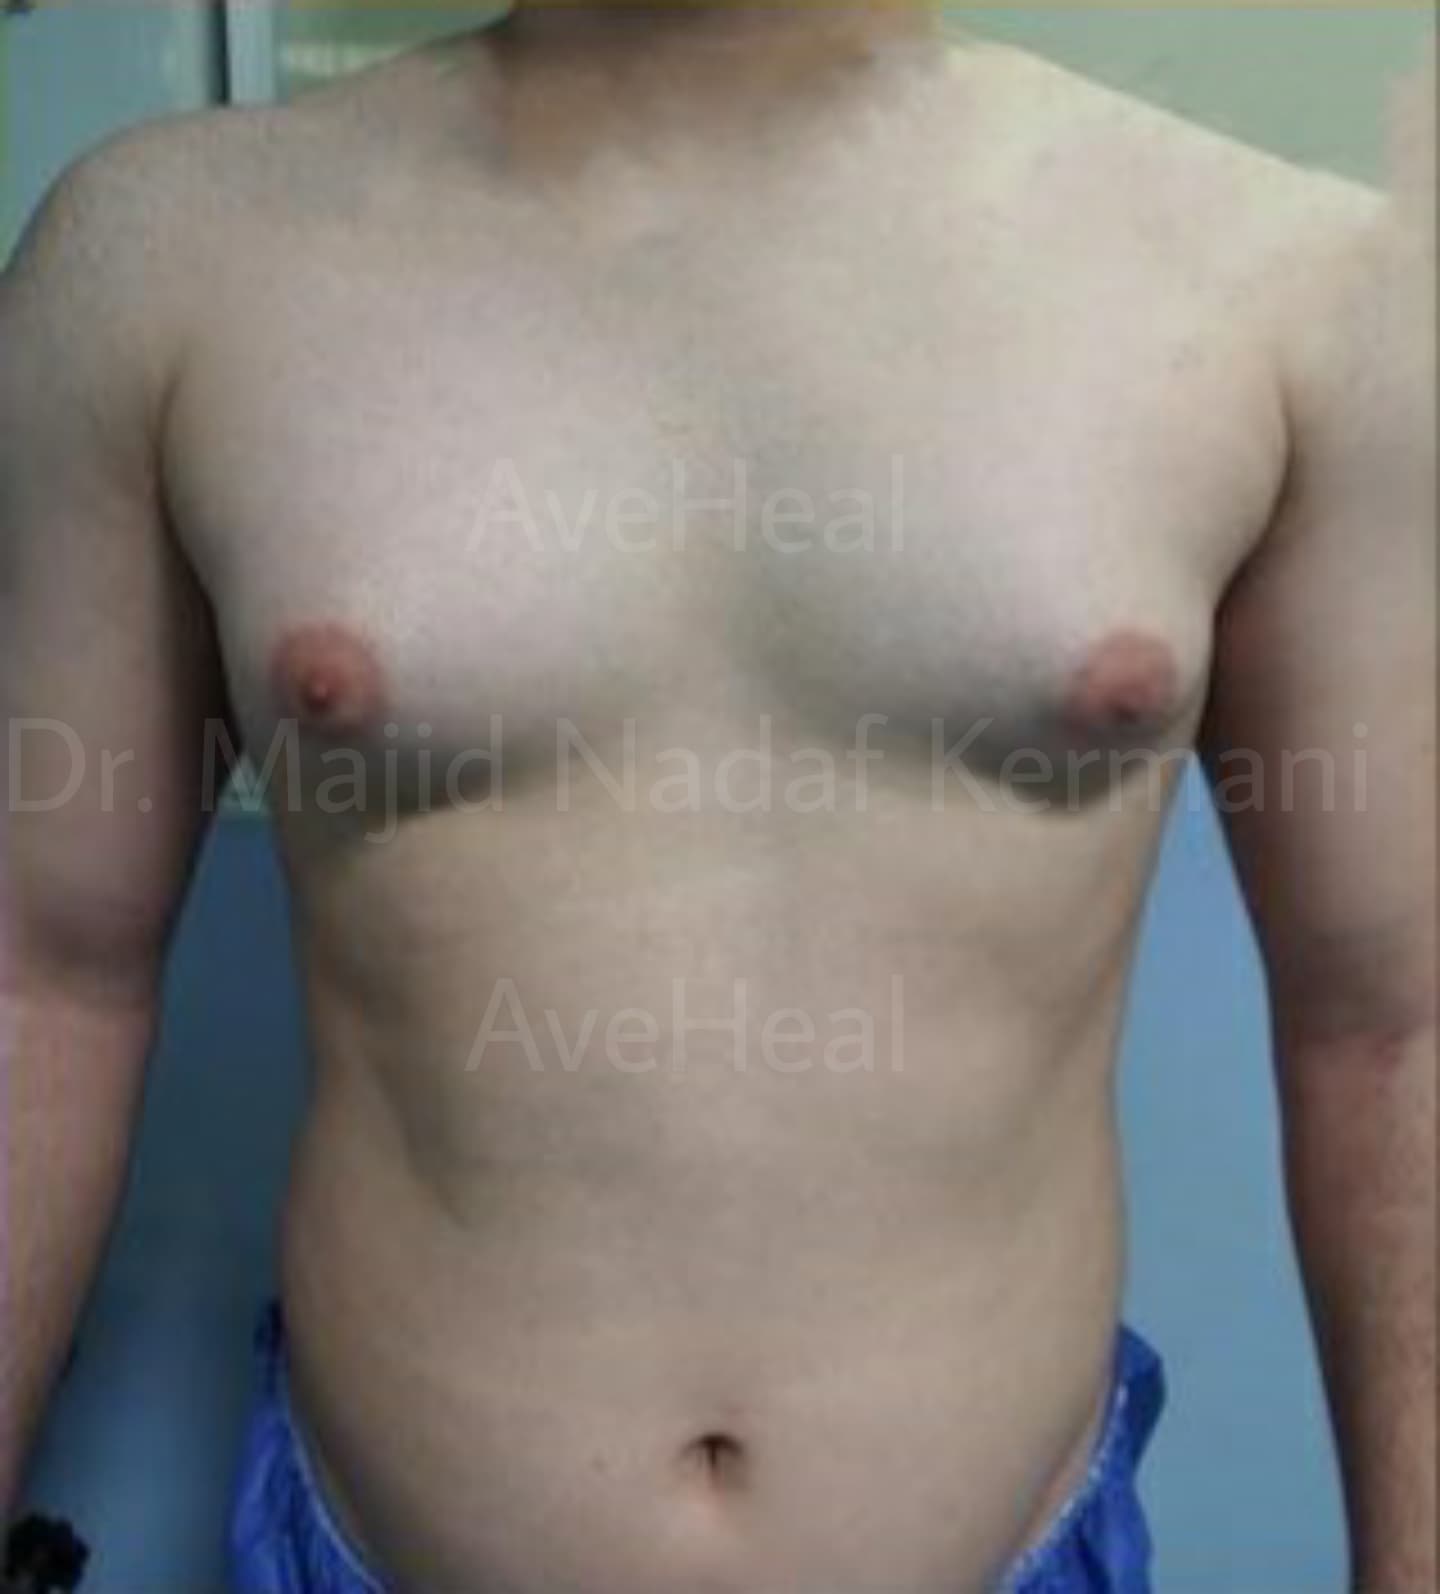 before-gynecomastia-dr-majid-nadaf-kermani